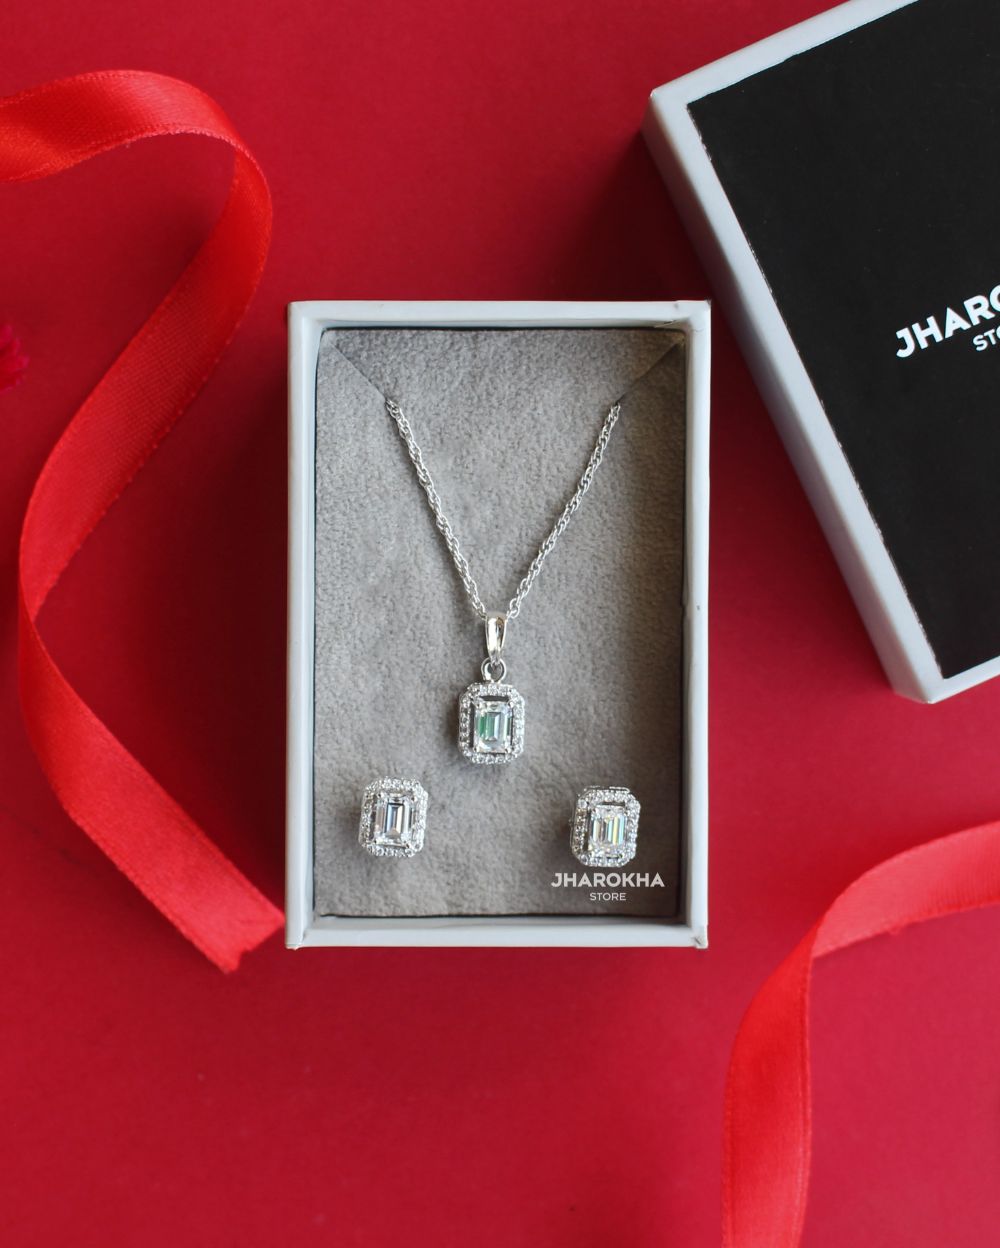 Emerald Cut Emerald Necklace - Zoe Lev Jewelry